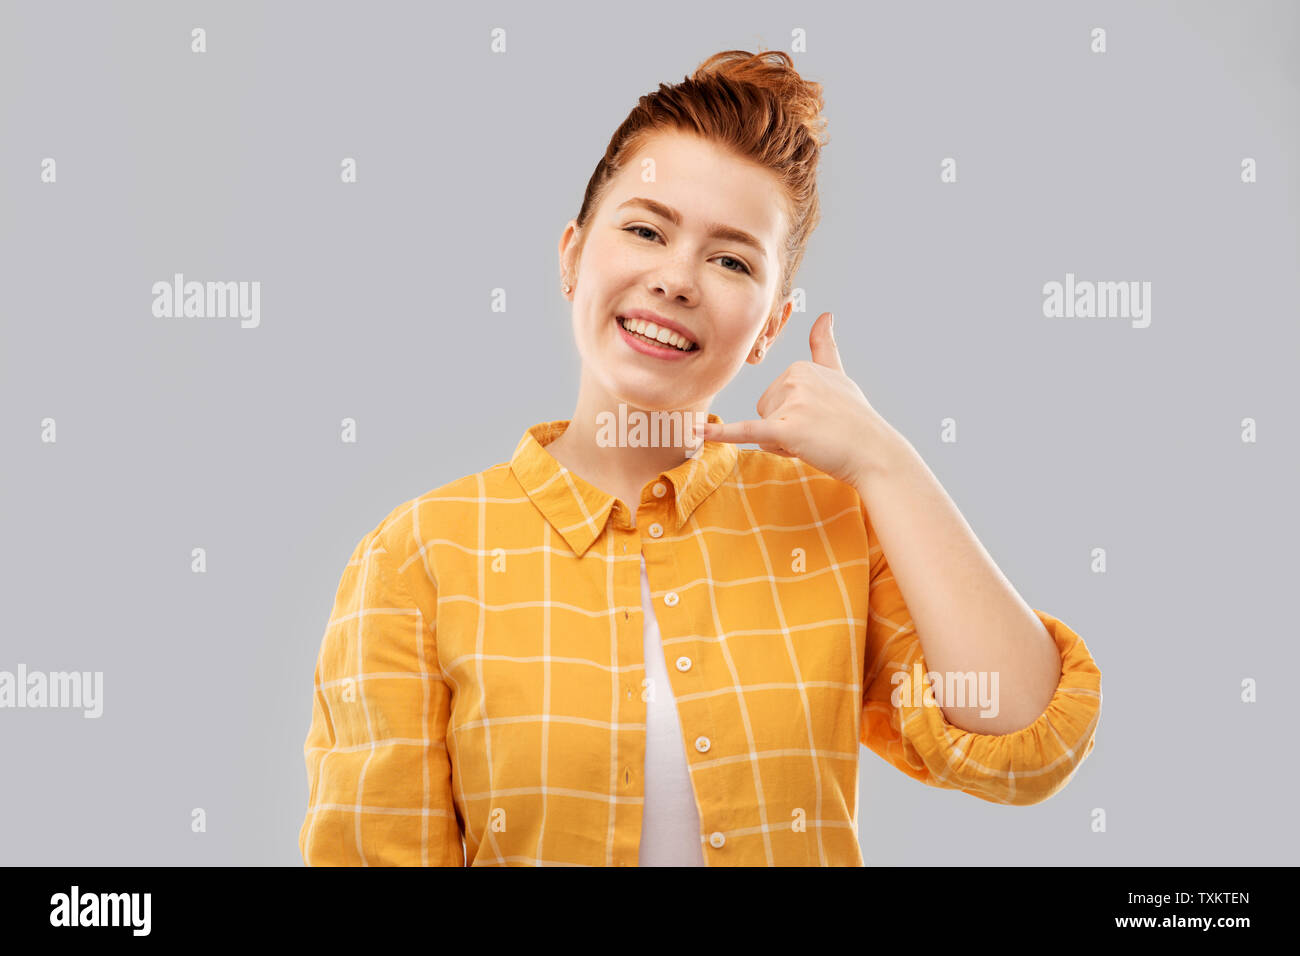 redhead teenage girl making phone call gesture Stock Photo